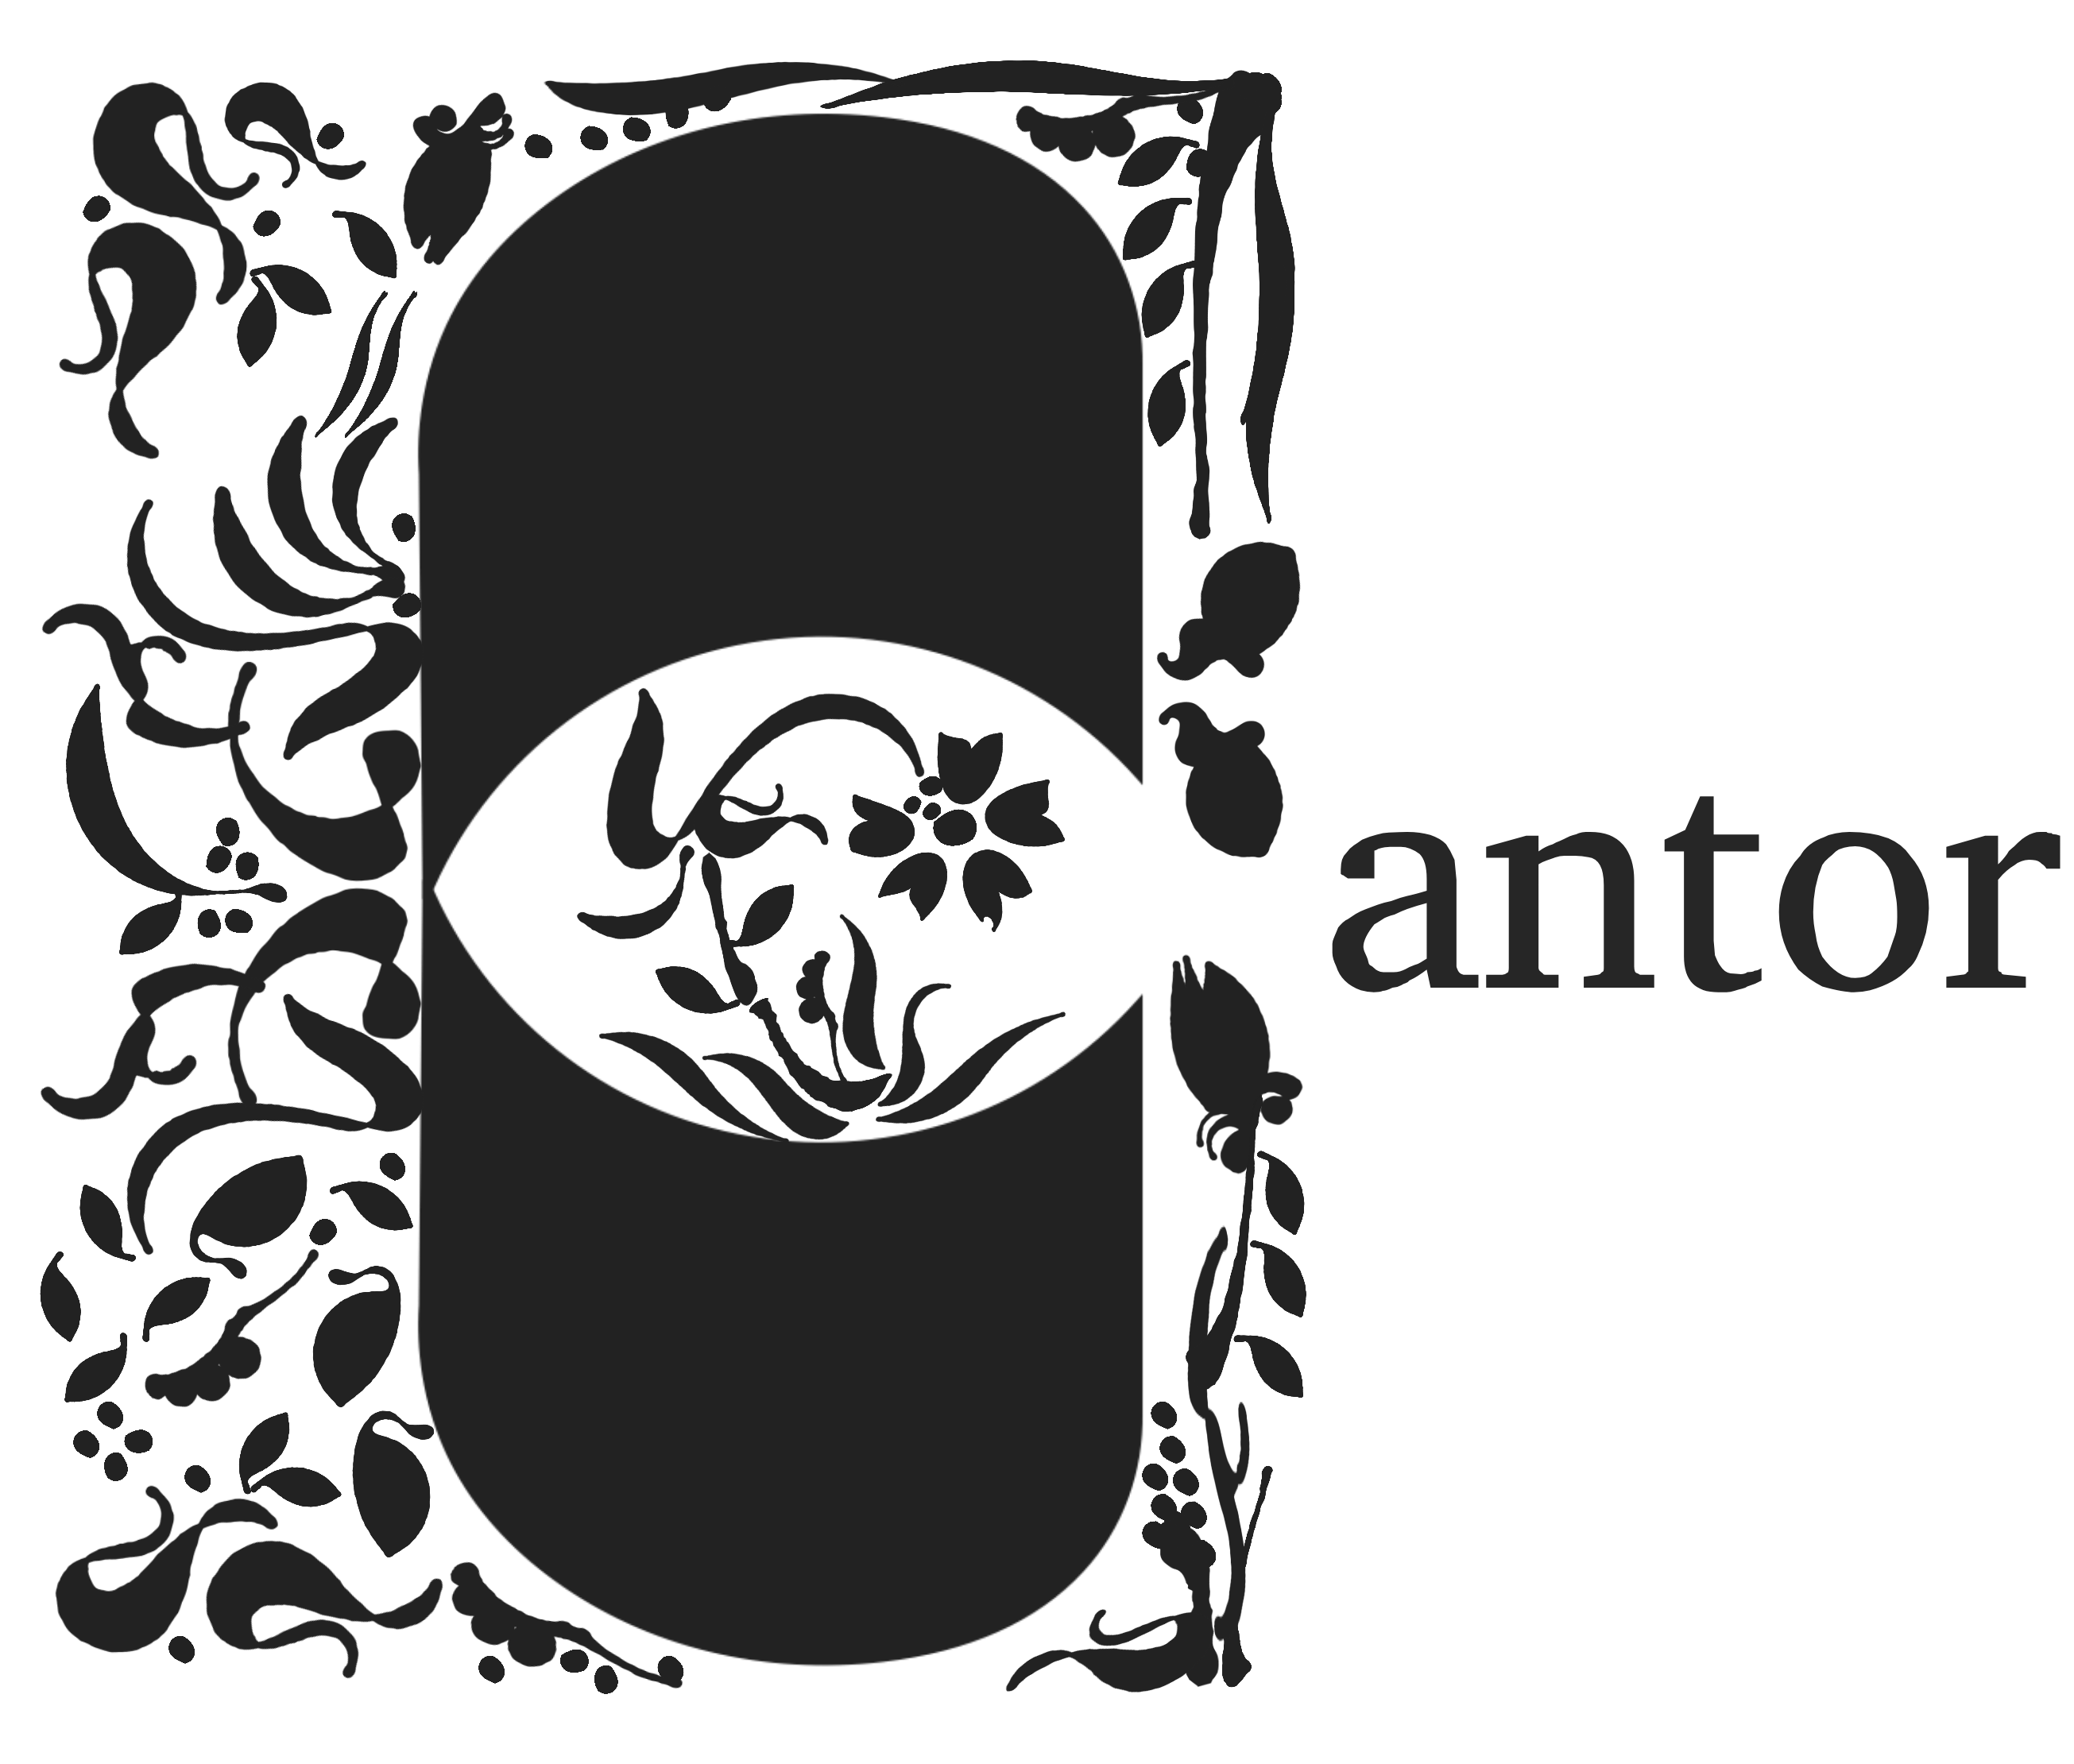 Cantor icon